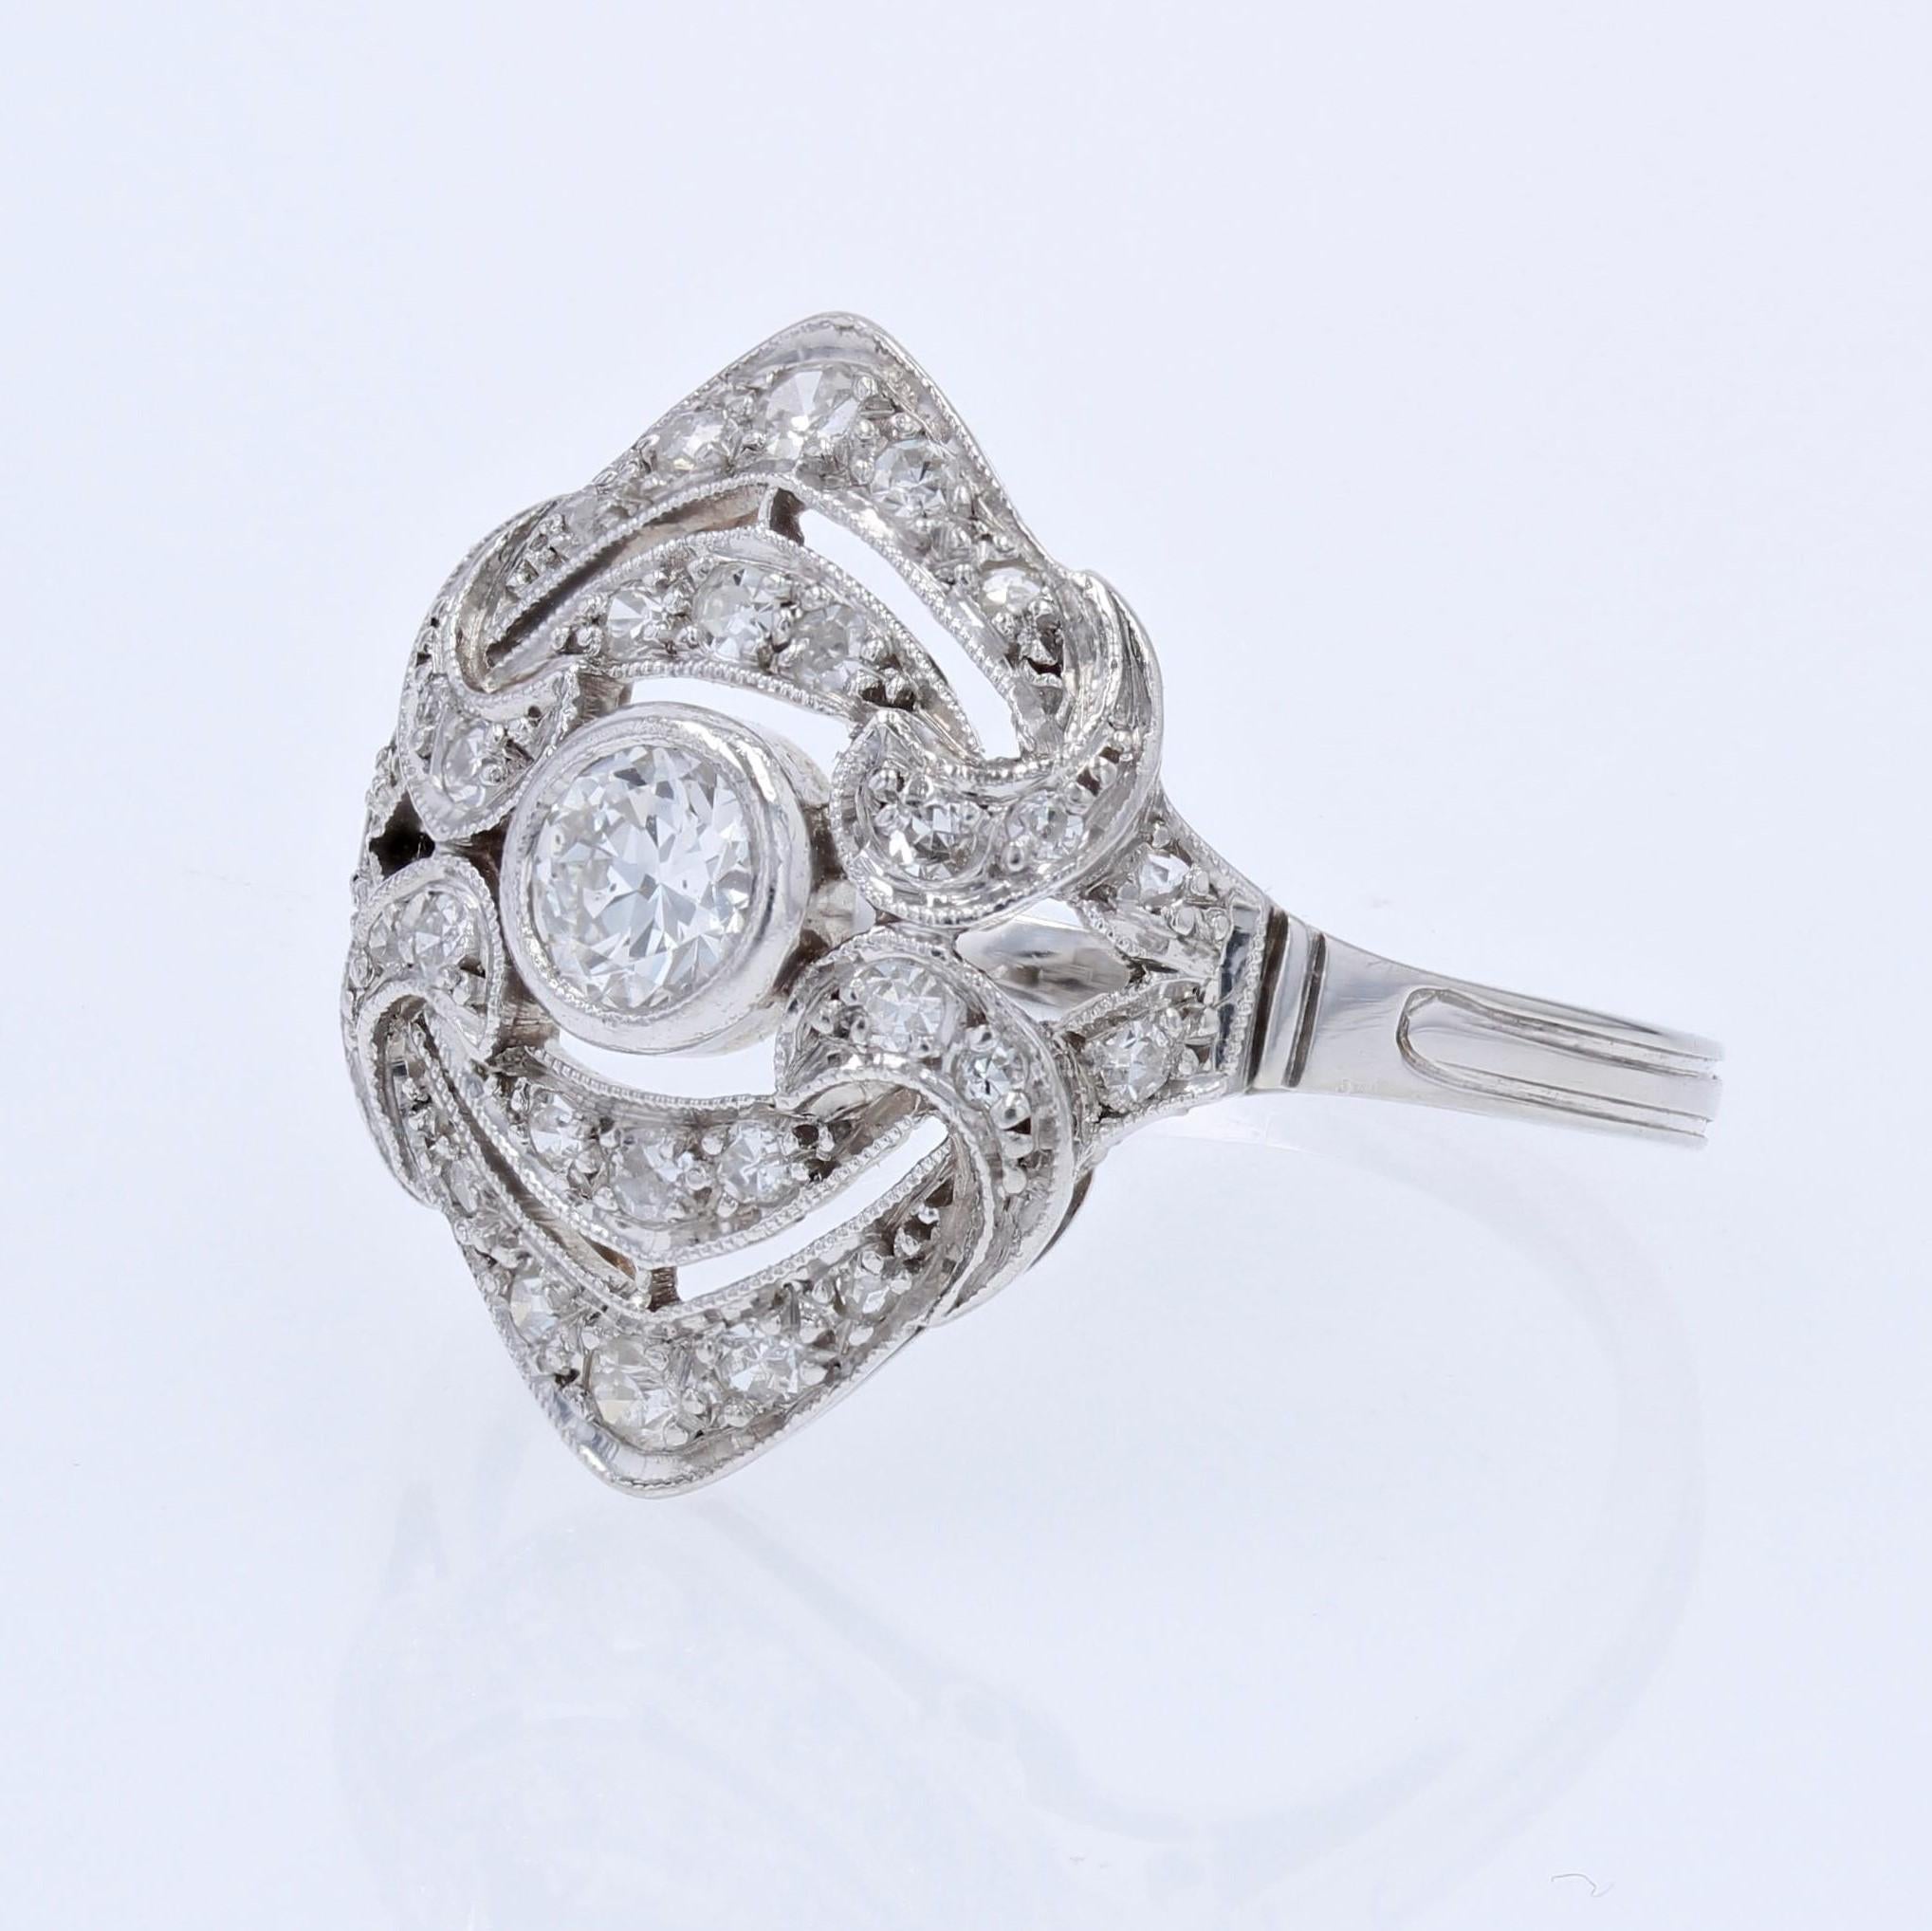 French 1930s Art Deco Style Diamonds 18 Karat White Gold Ring For Sale 2